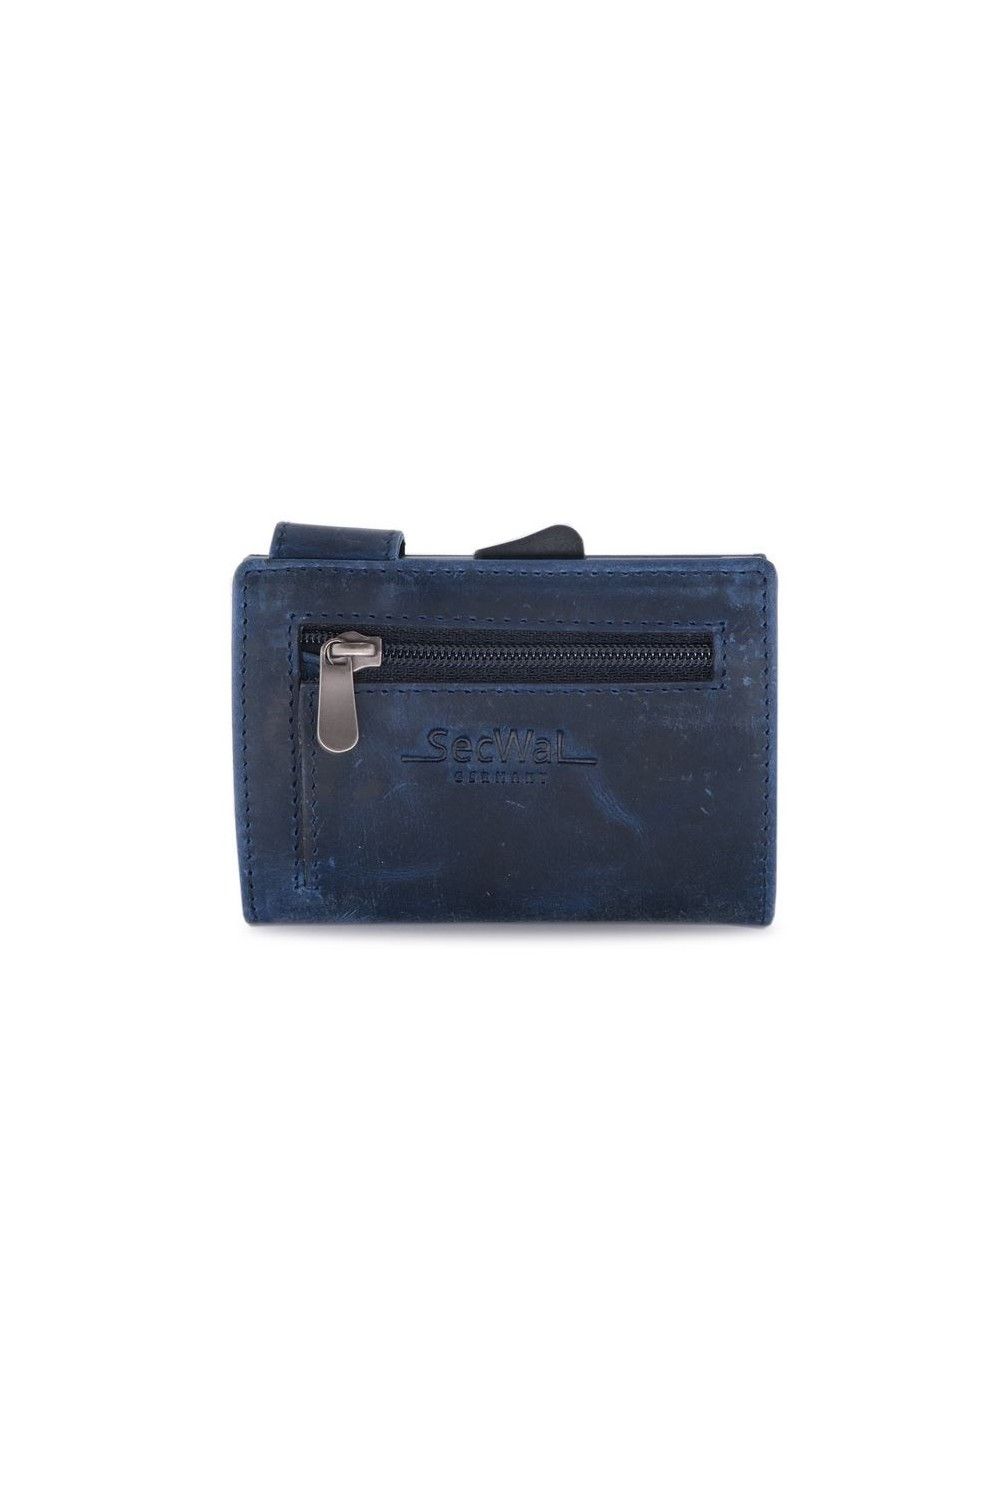 SecWal Card Case RV Leather Hunter Blue